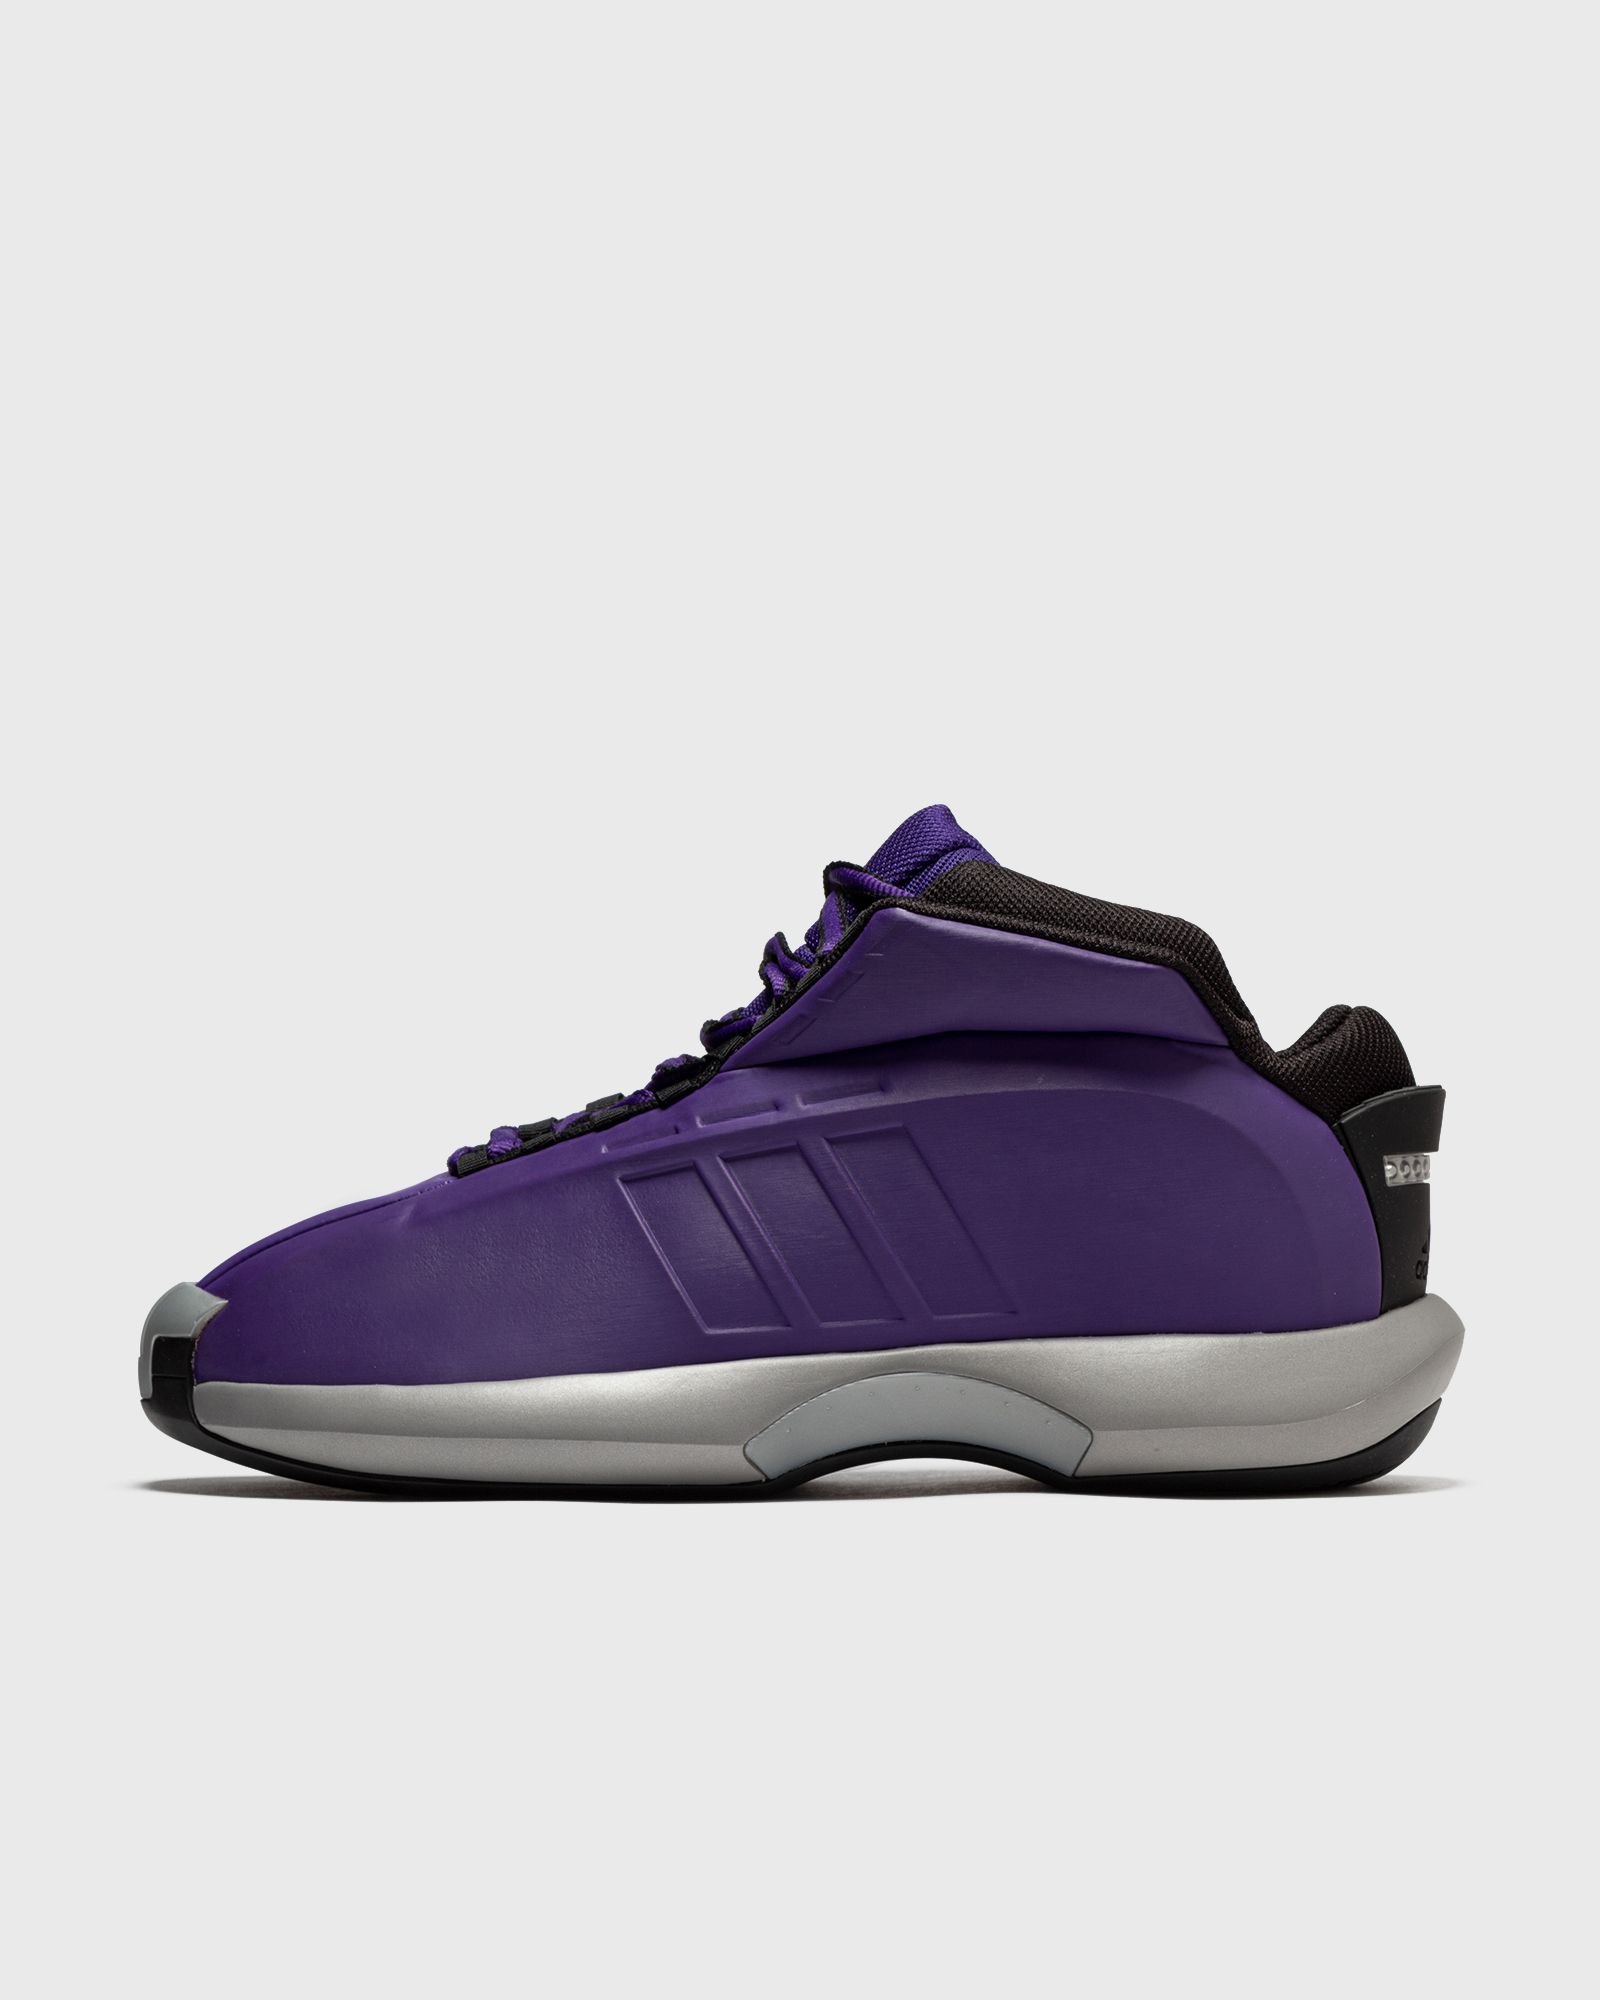 Adidas - crazy 1 men basketball|high-& midtop purple in größe:44 2/3